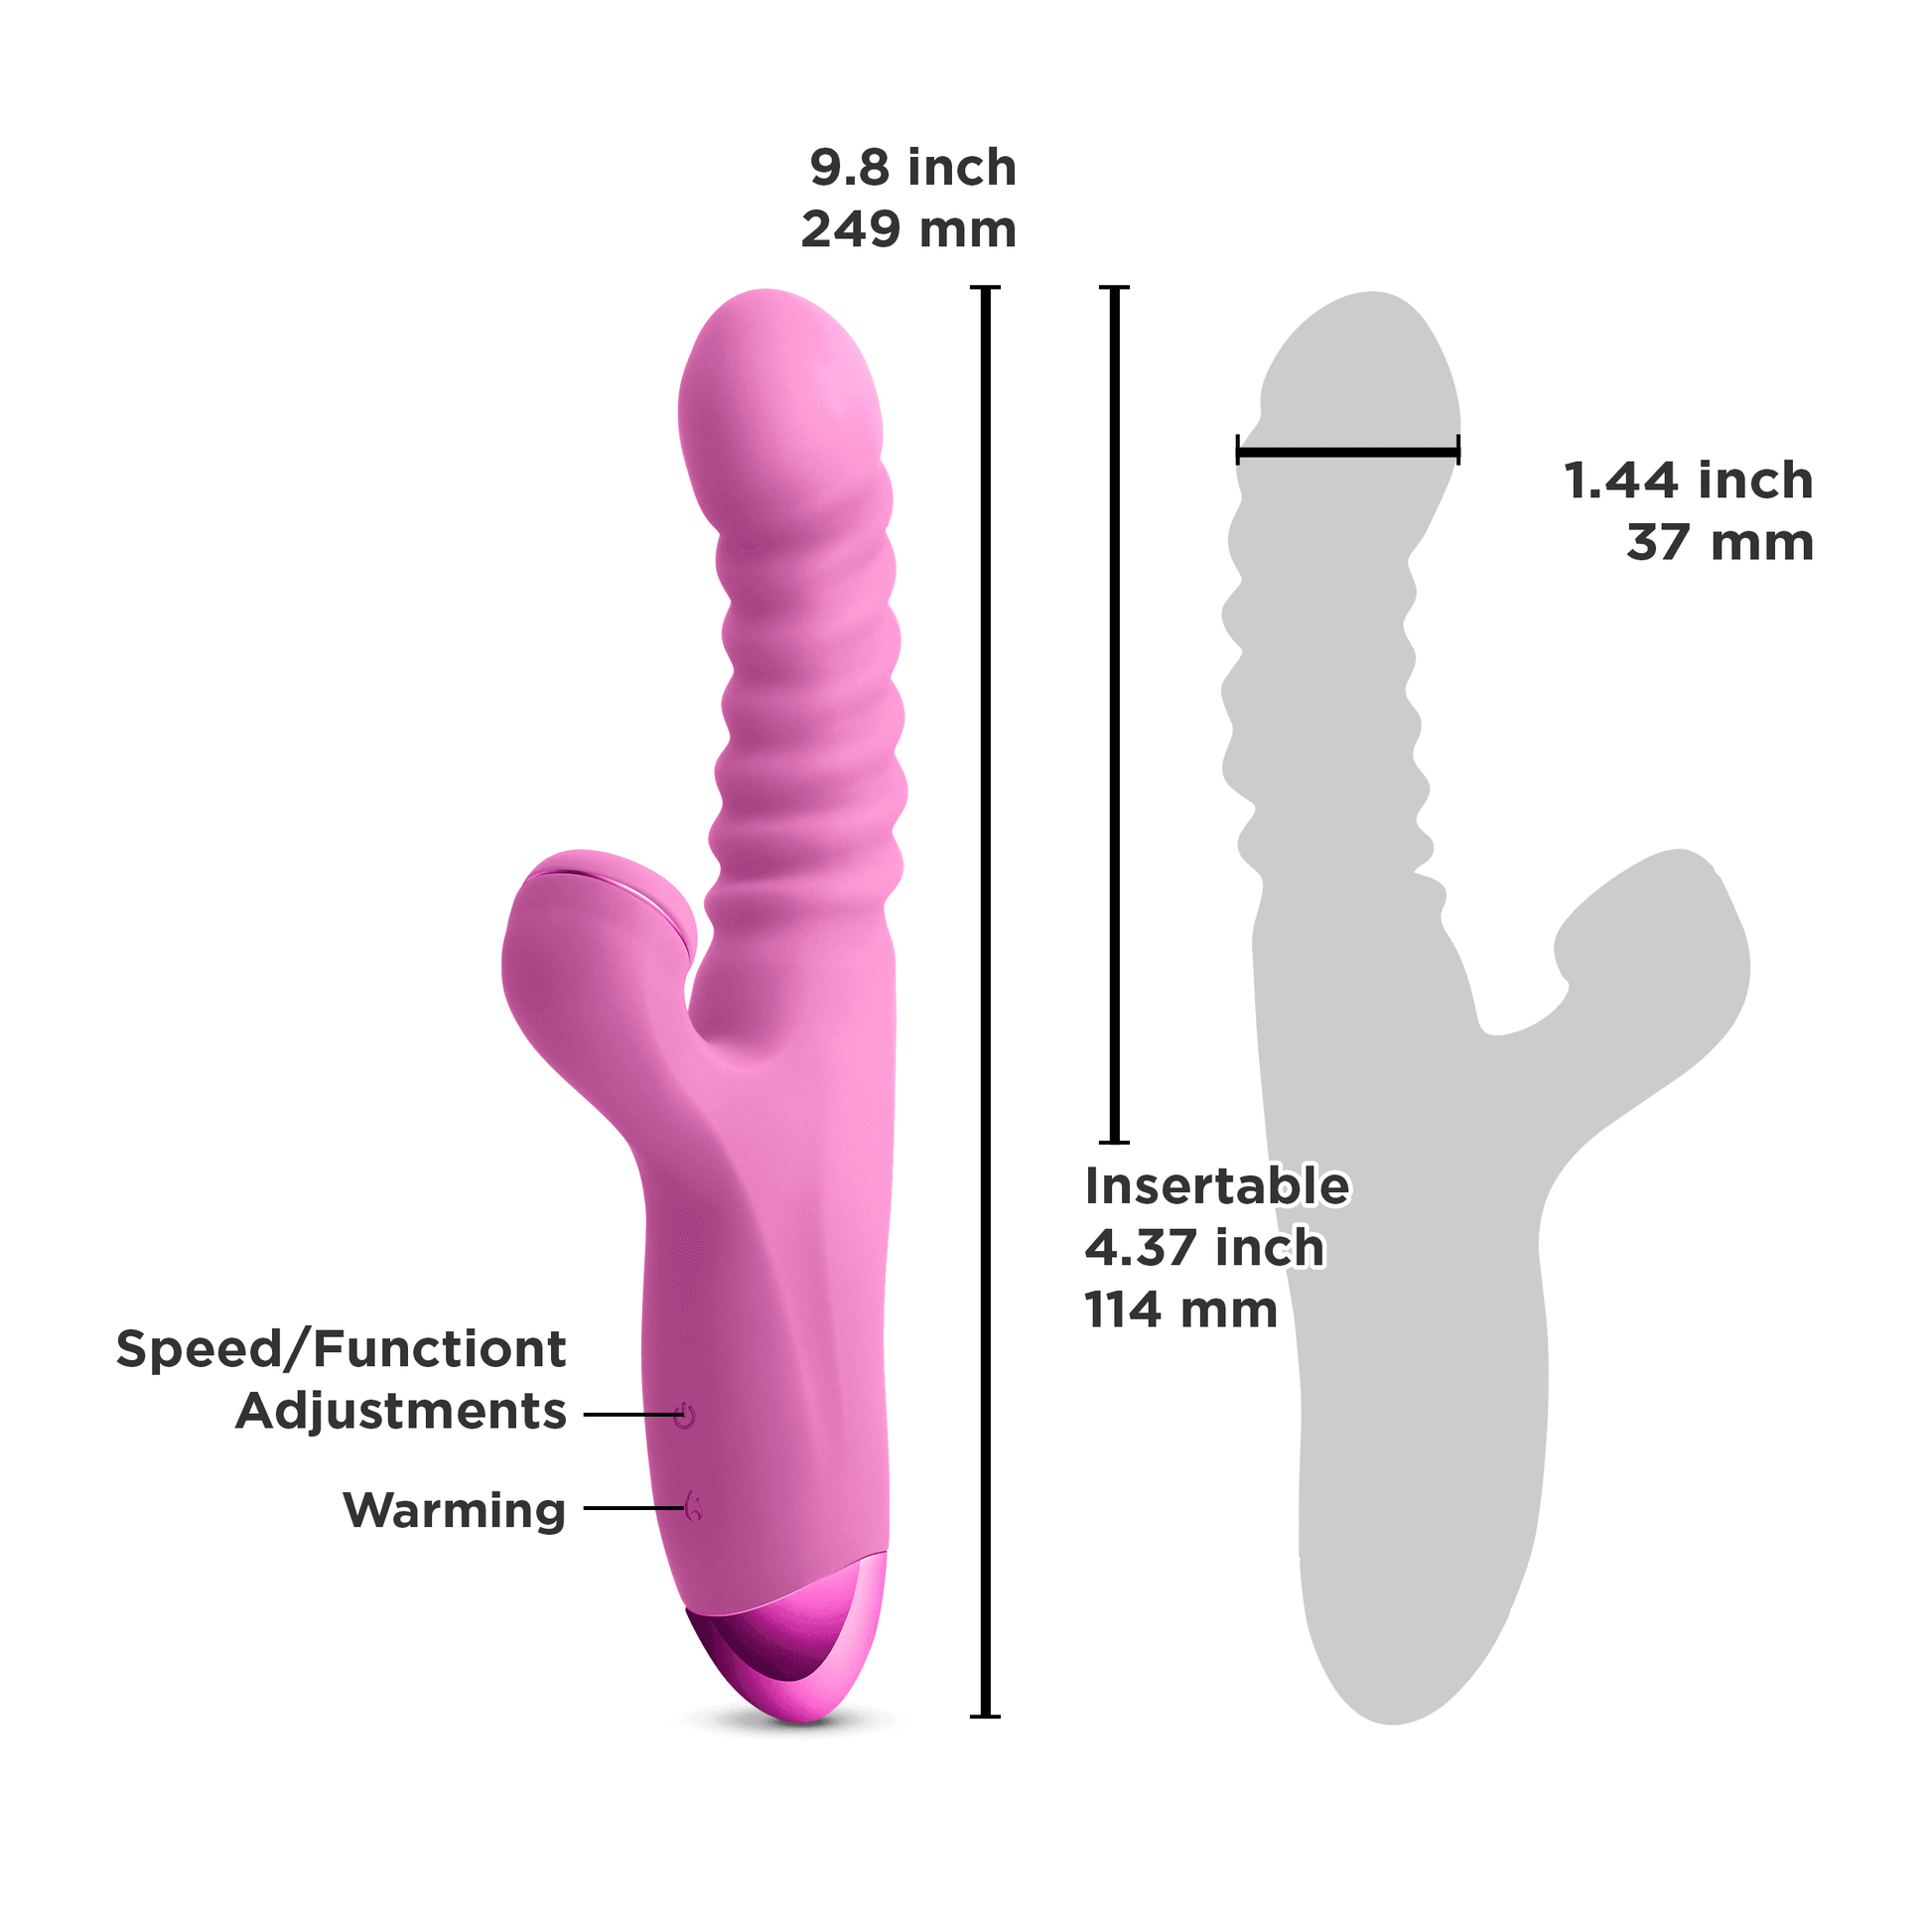 Luxe - Nova - Pink - My Sex Toy Hub